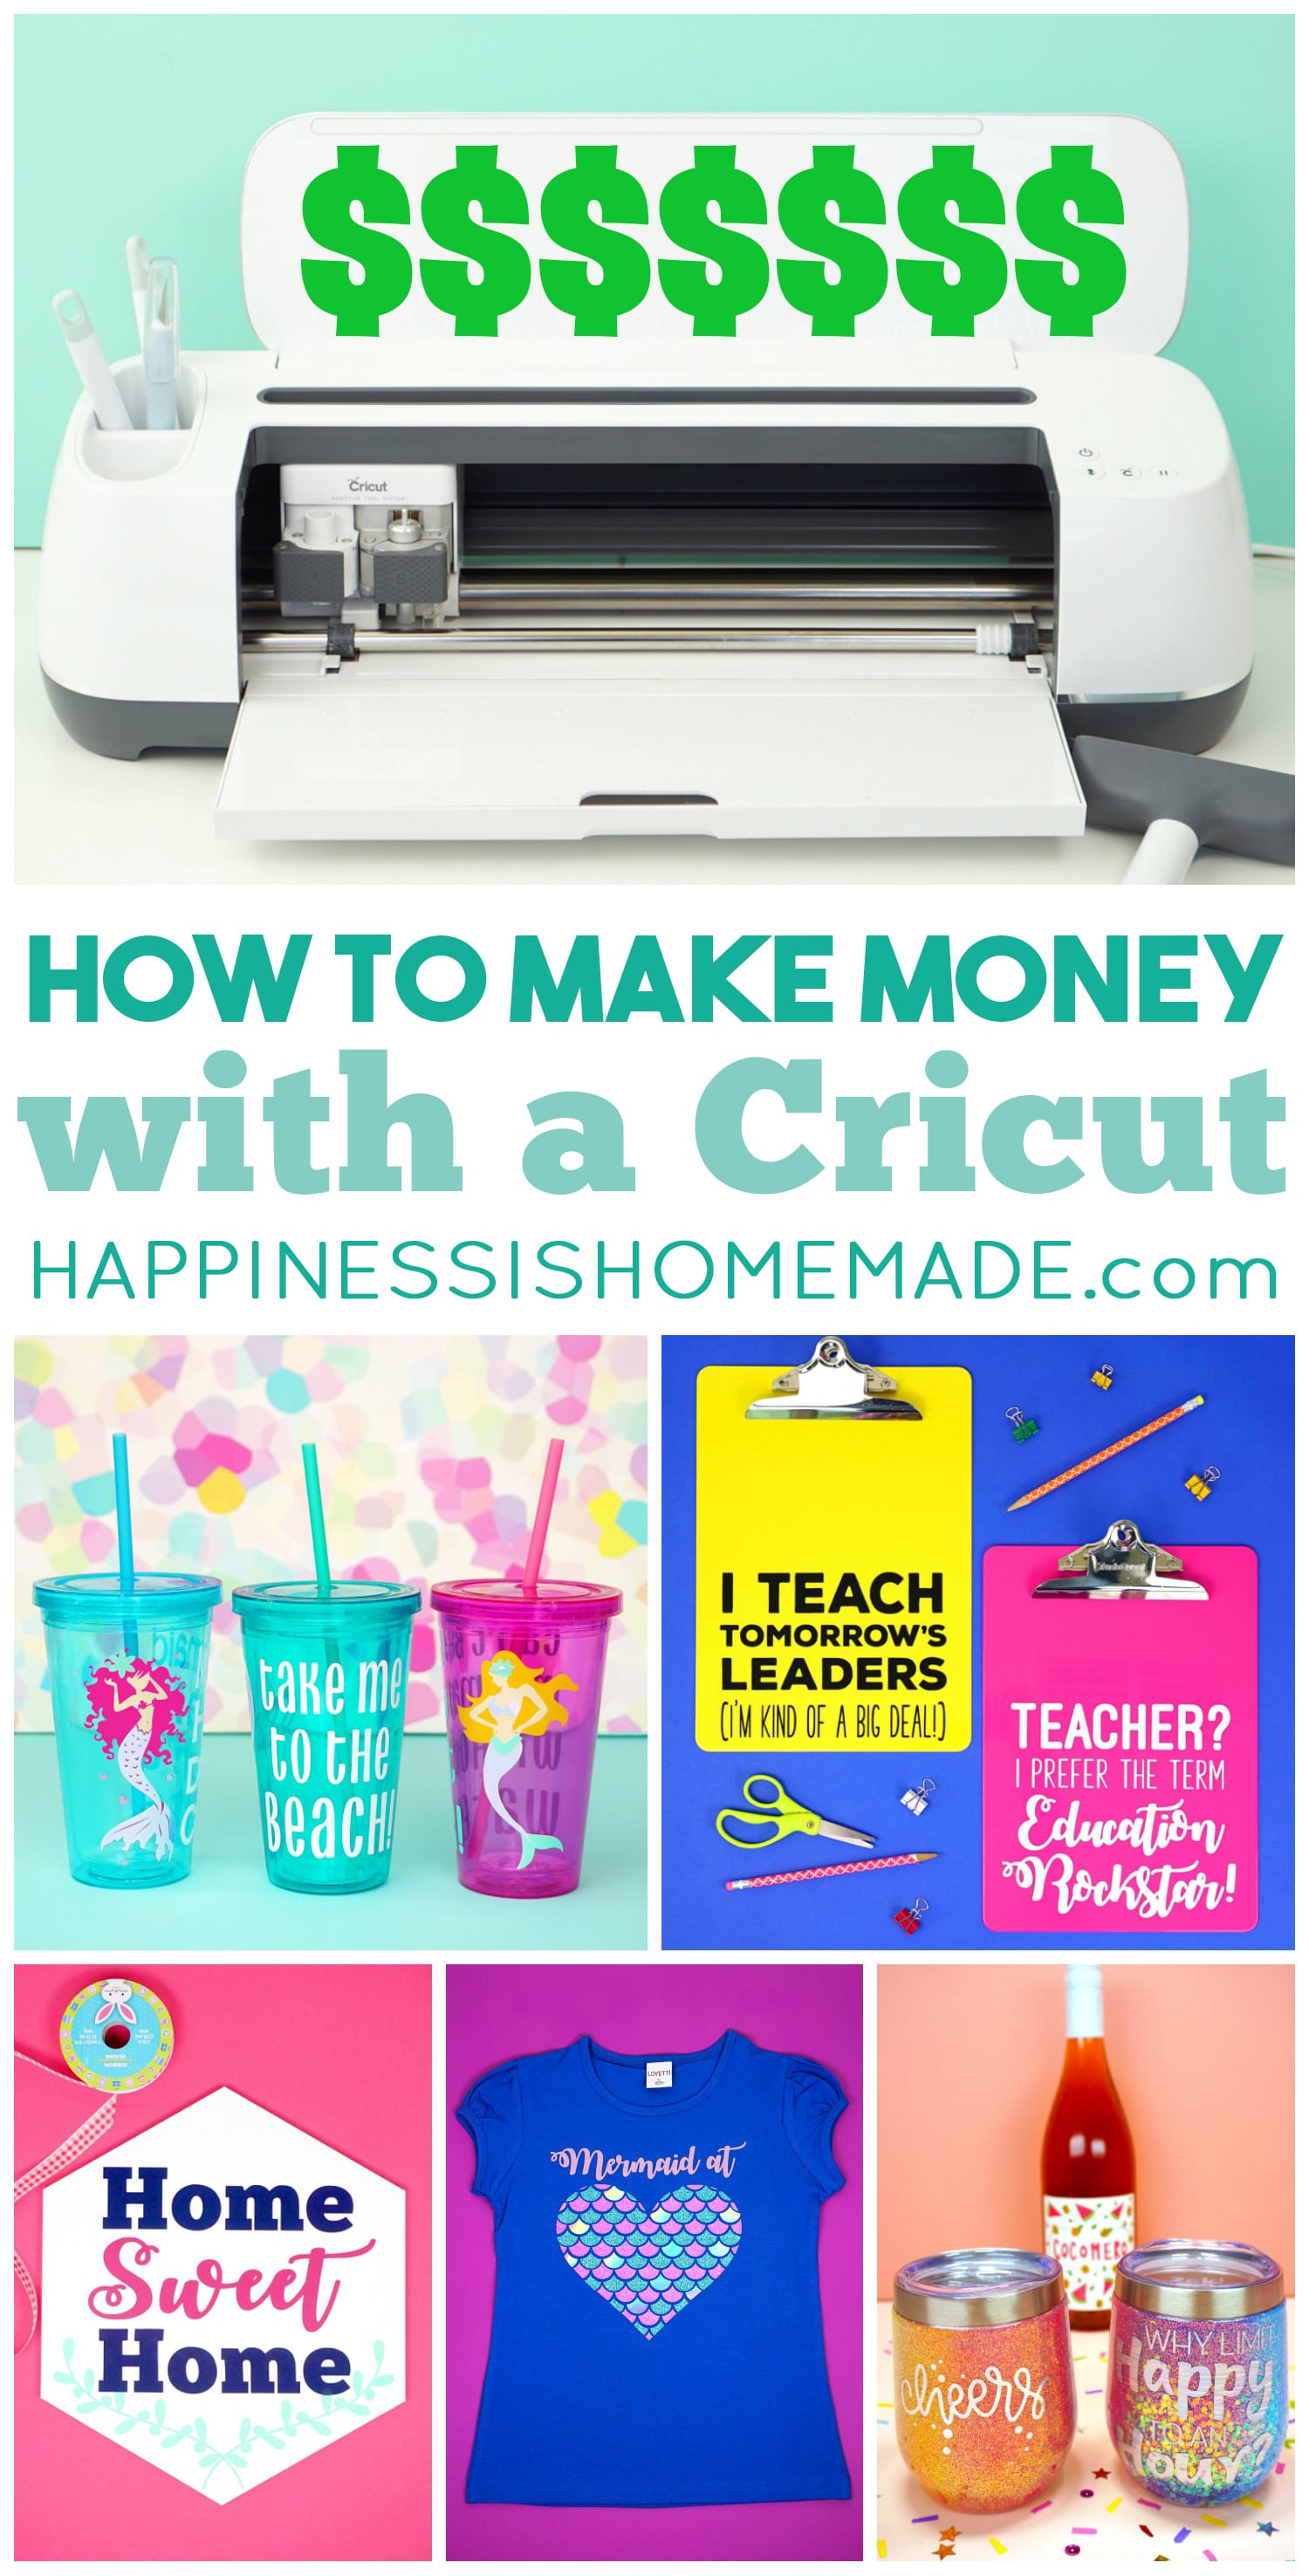 How to use i-cord machine - Nicki's Homemade Crafts